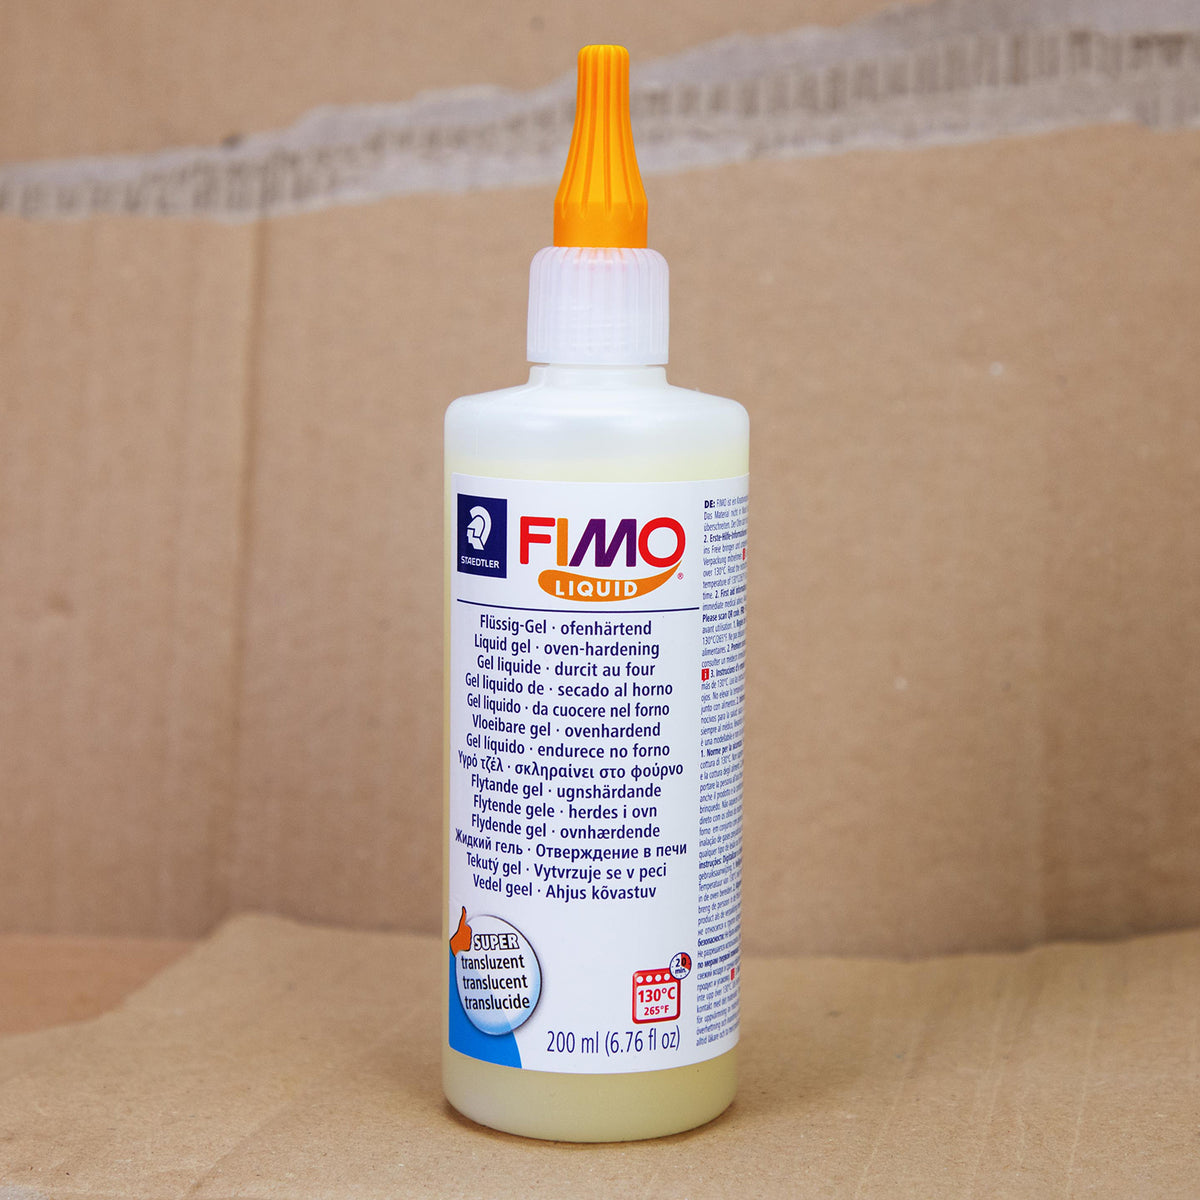 FIMO® liquid 8050 - Oven-bake liquid gel